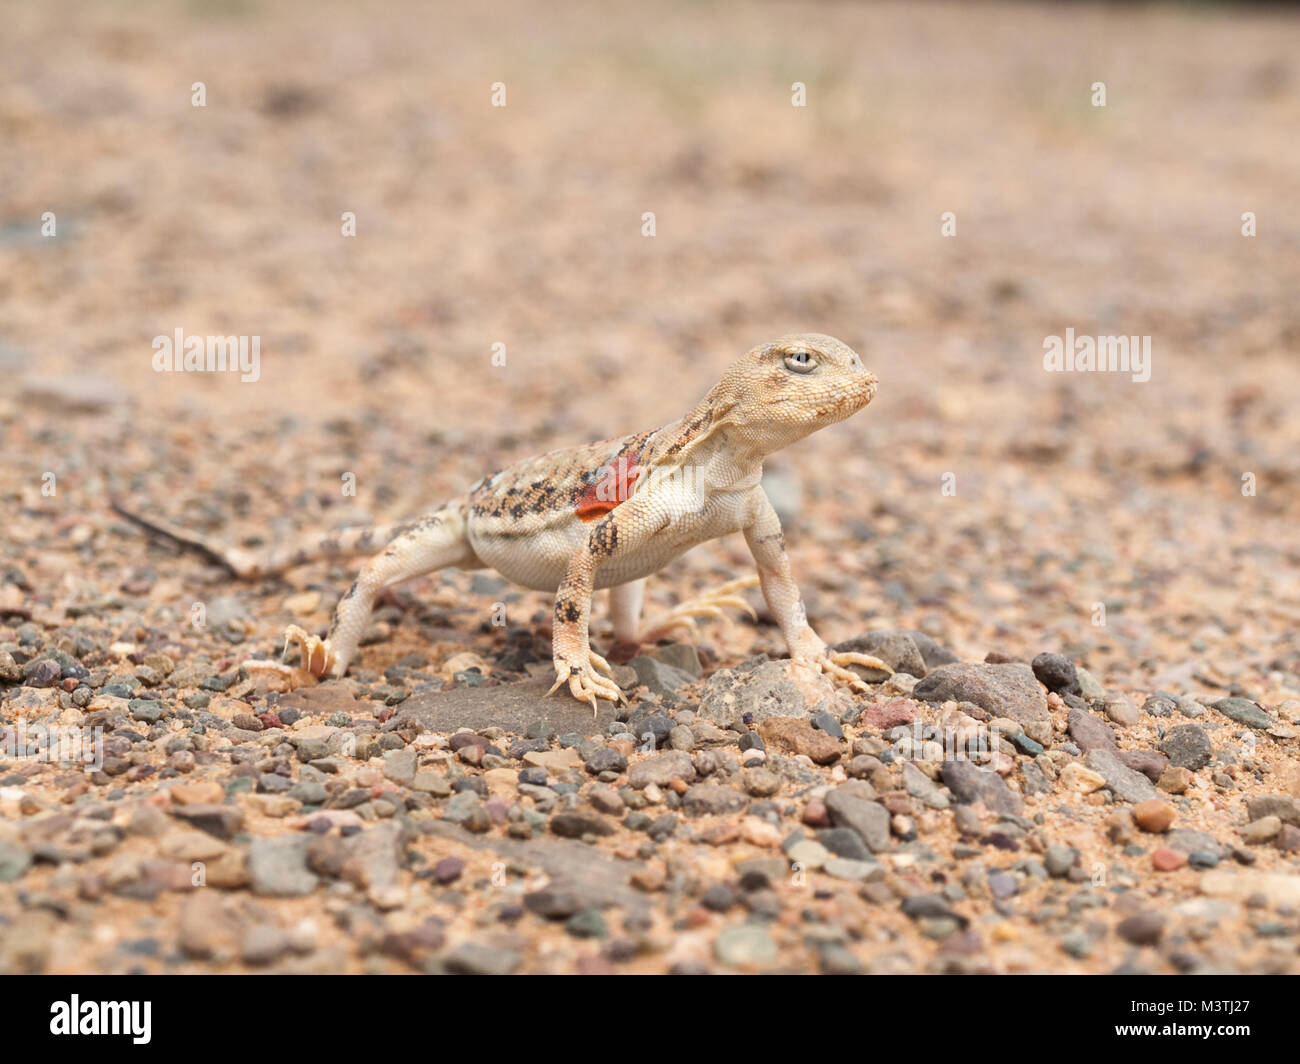 Gobi desert lizard Stock Photo